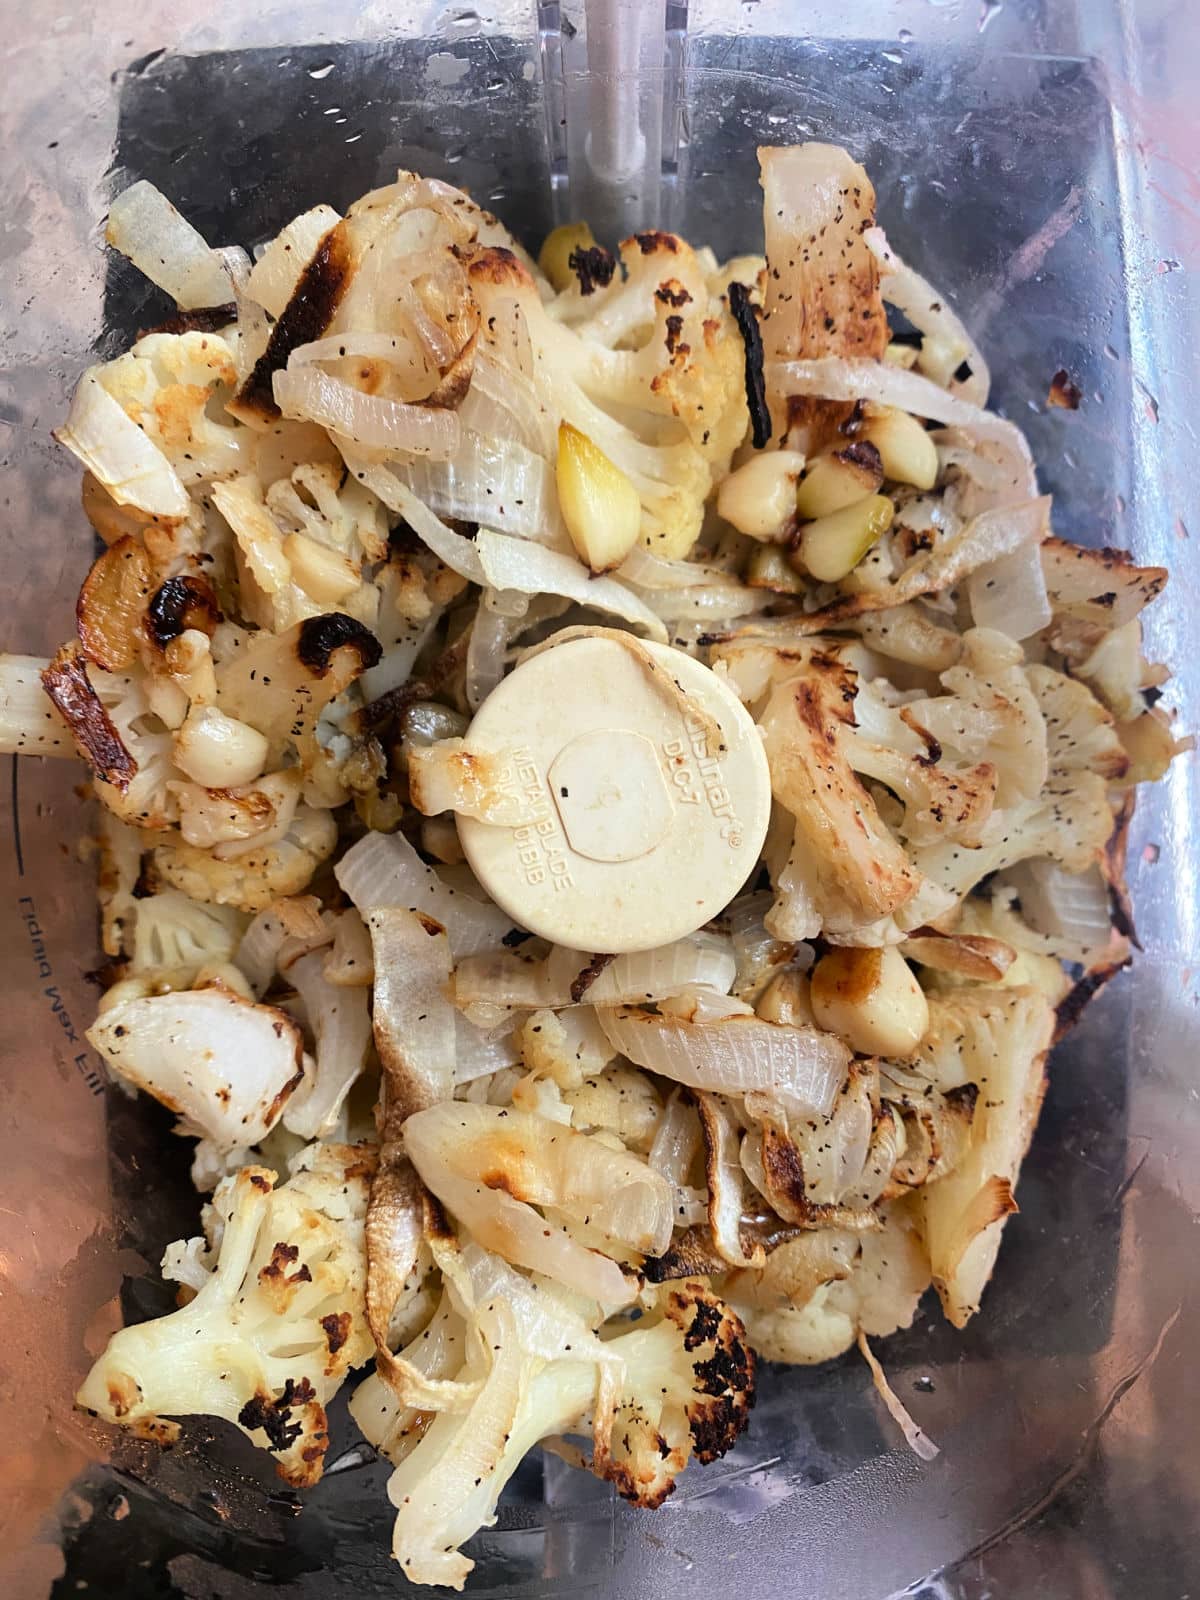 Ingredients for cauliflower hummus in a food processor bowl